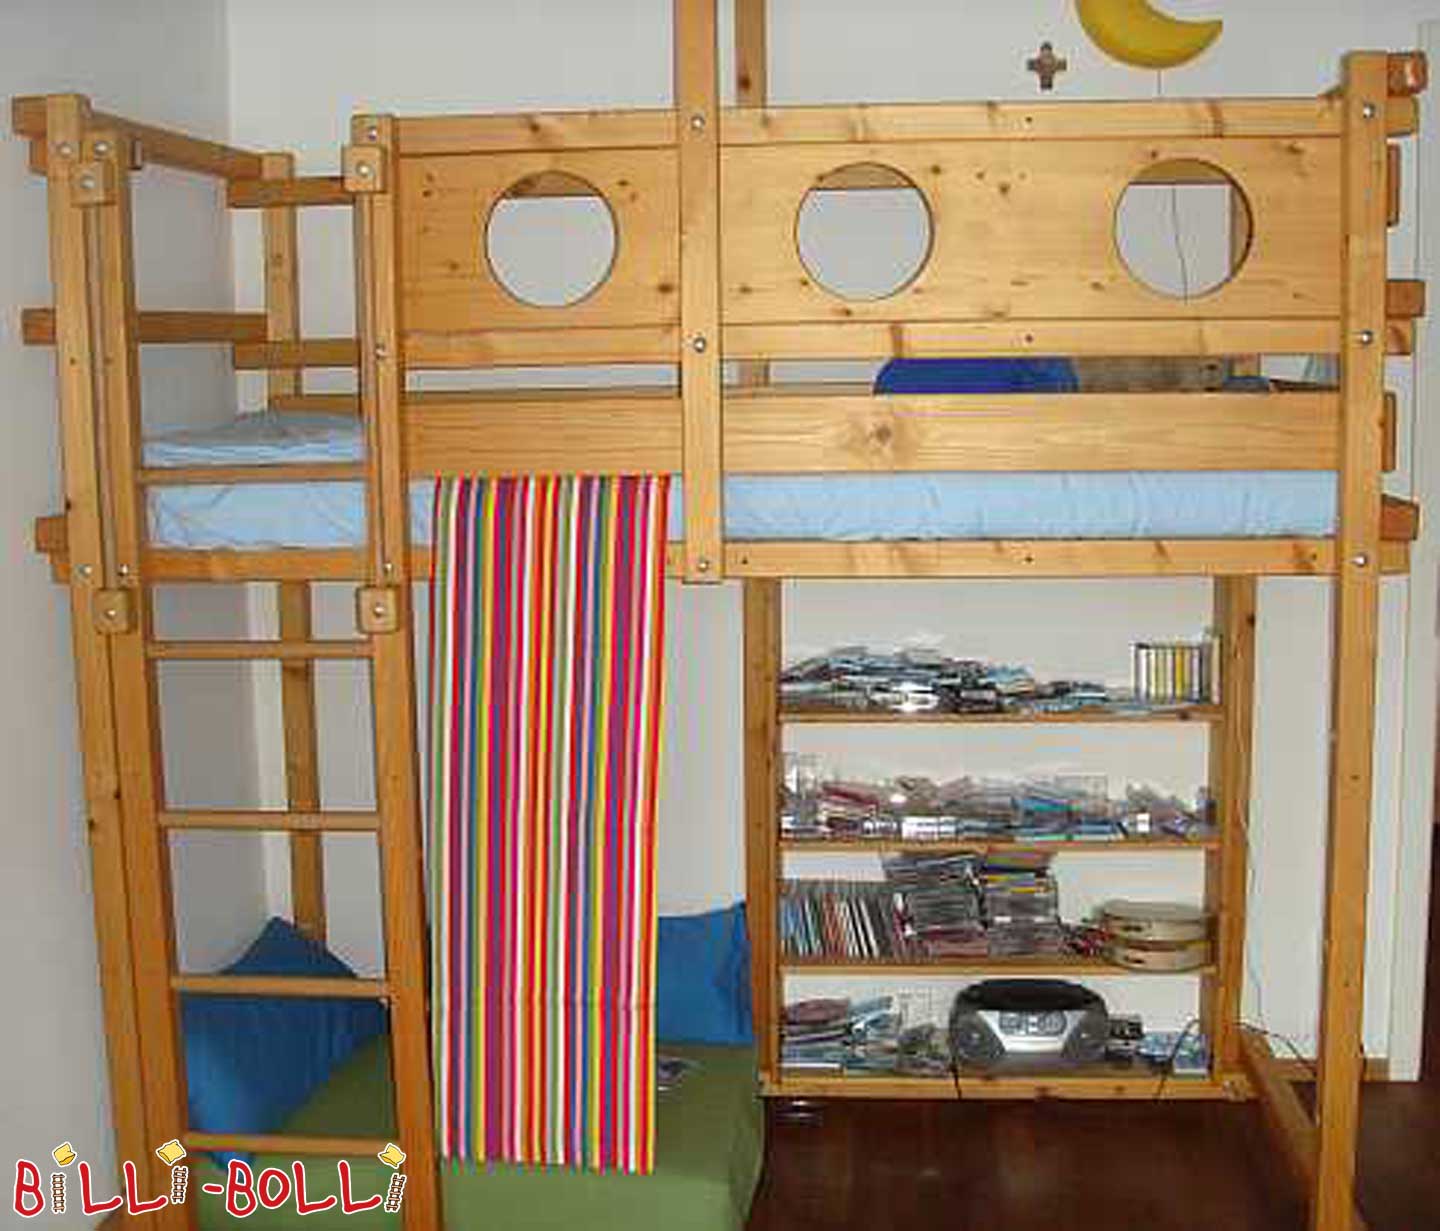 Original Billi - Bolli Kinderbett, gekauft September 2003, s (Kategorie: Hochbett gebraucht)